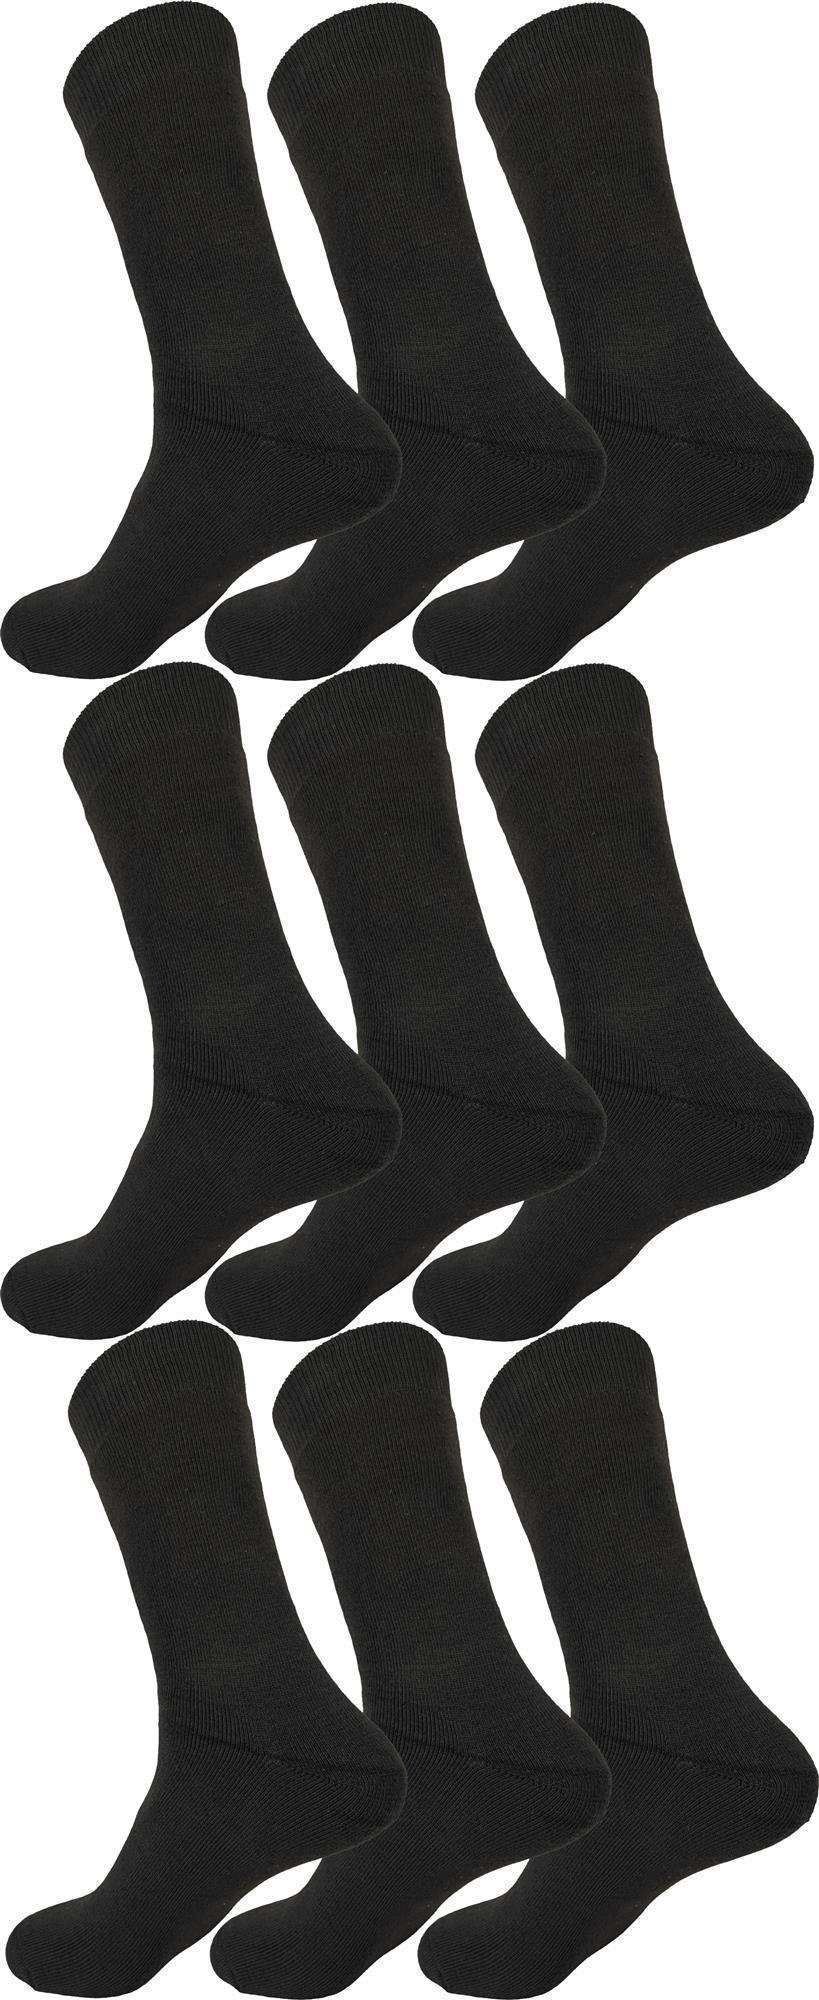 EloModa Thermosocken 12 Paar Thermo Winter Socken Vollfrottee Warm Baumwolle; 39-42 43-46 (12-Paar) 12 Paar, Schwarz | Thermosocken